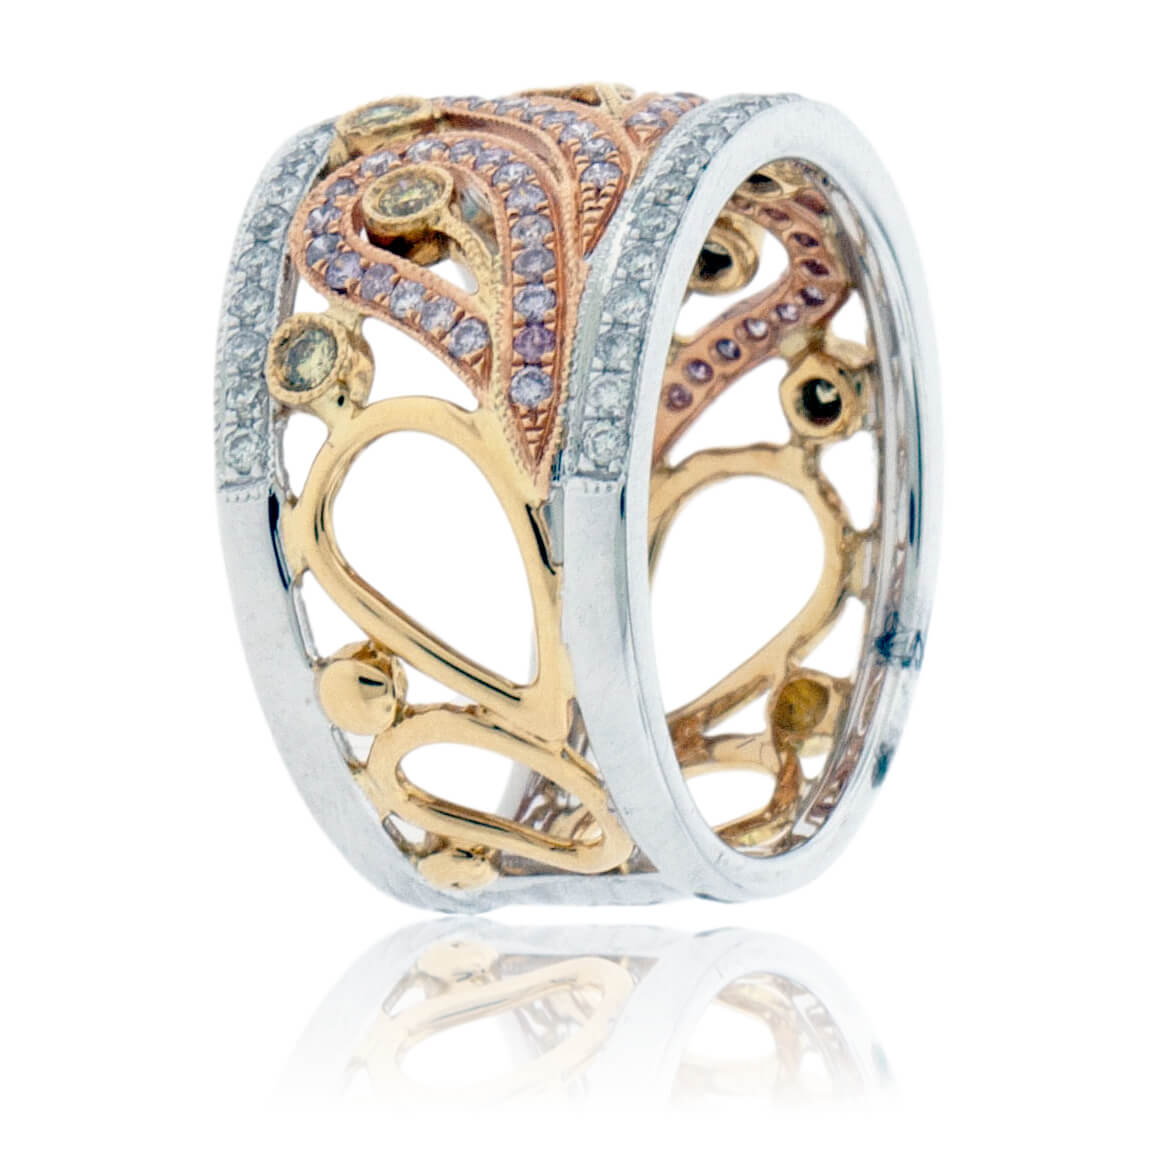 Tri-Colored Gold & Diamond Filigree Band - Park City Jewelers